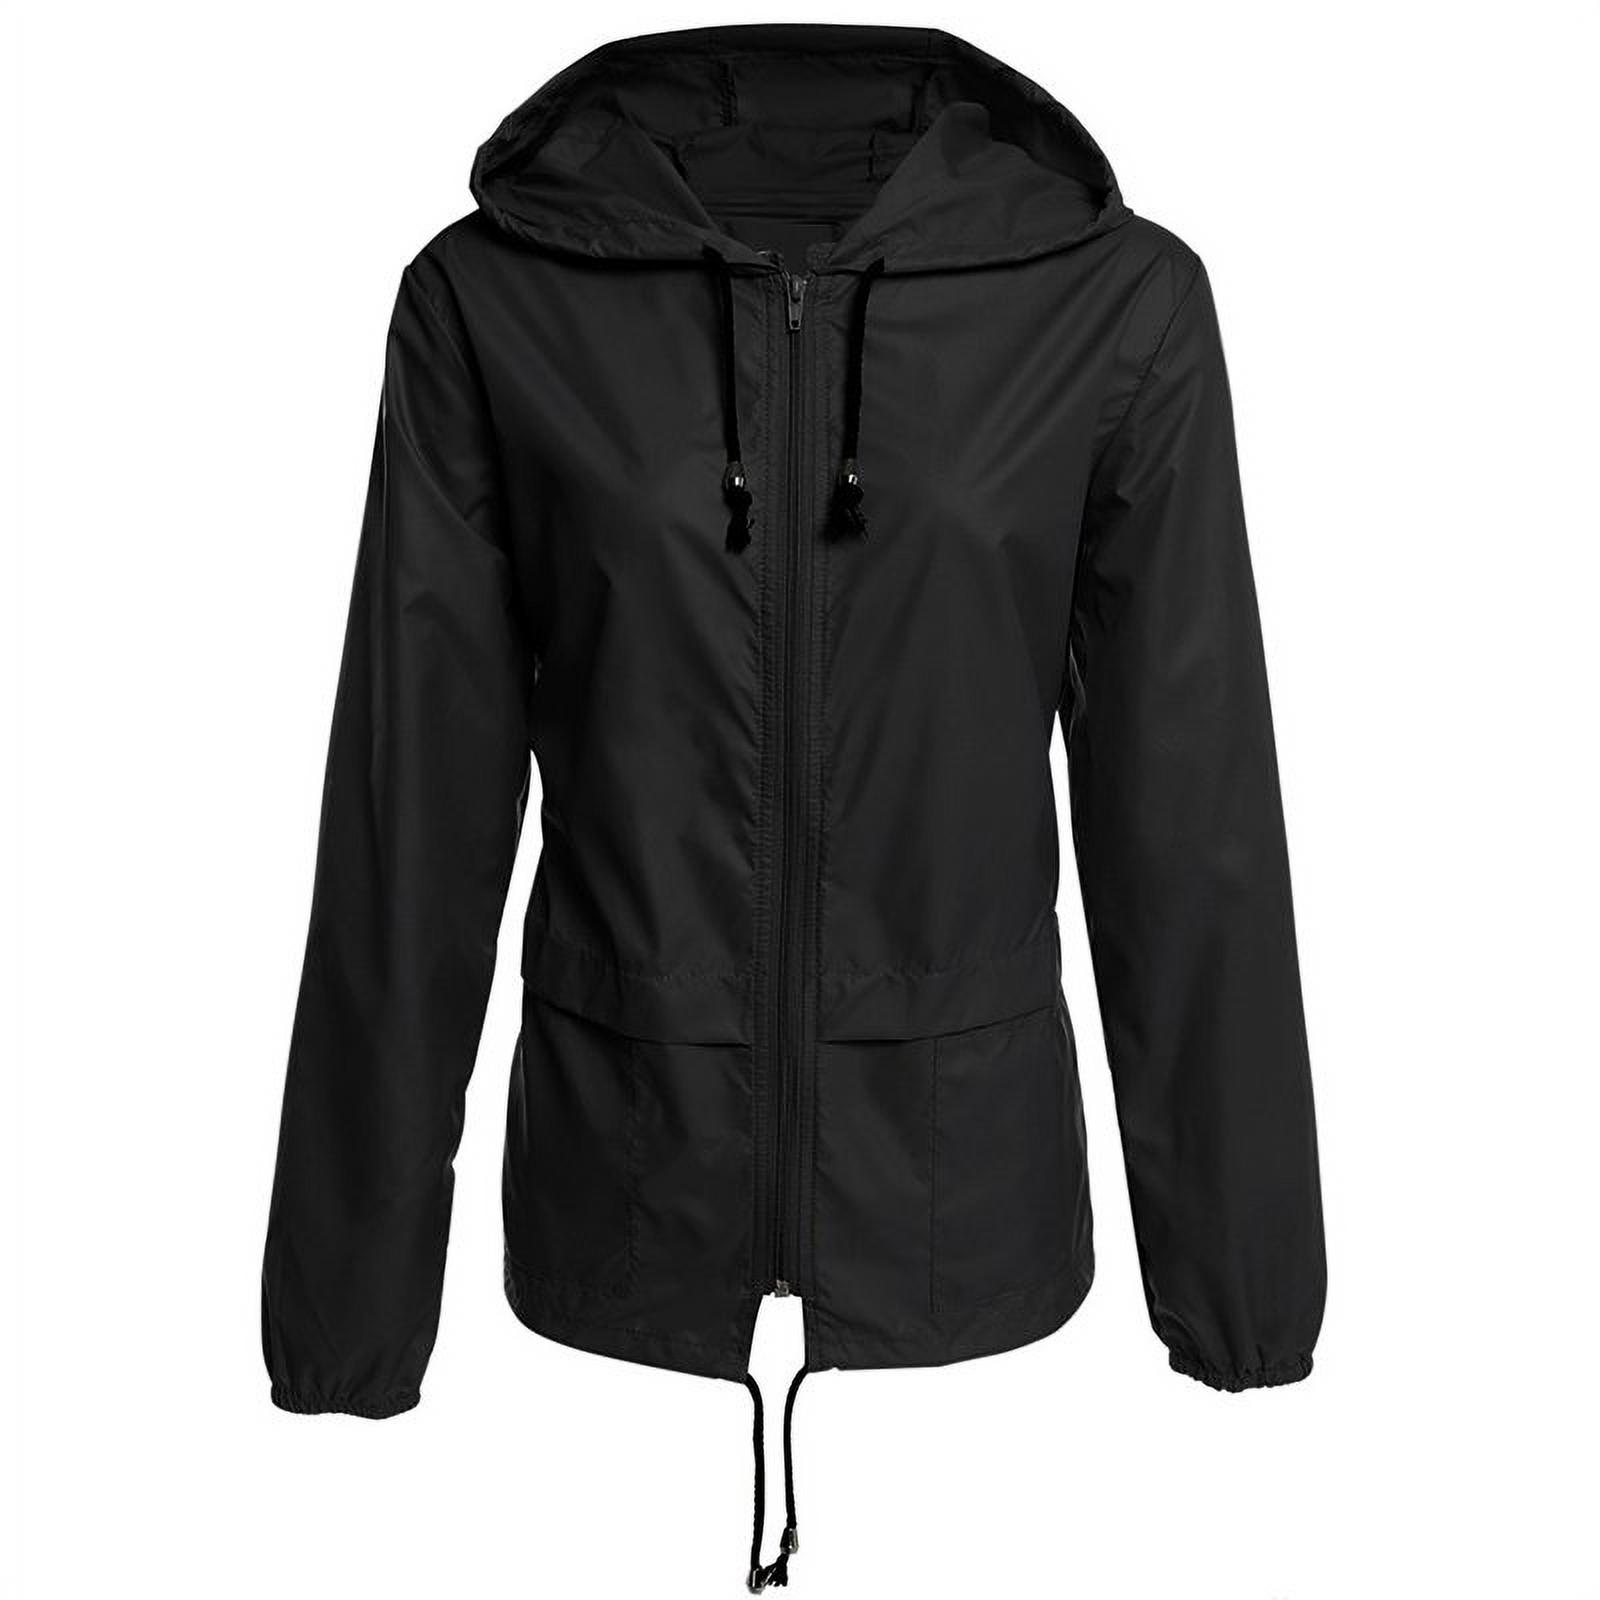 Fashion Thin Section Ladies Waterproof Clothing Hooded Drawstring Outdoor Hiking Rain Jacket Jacket - image 1 of 3